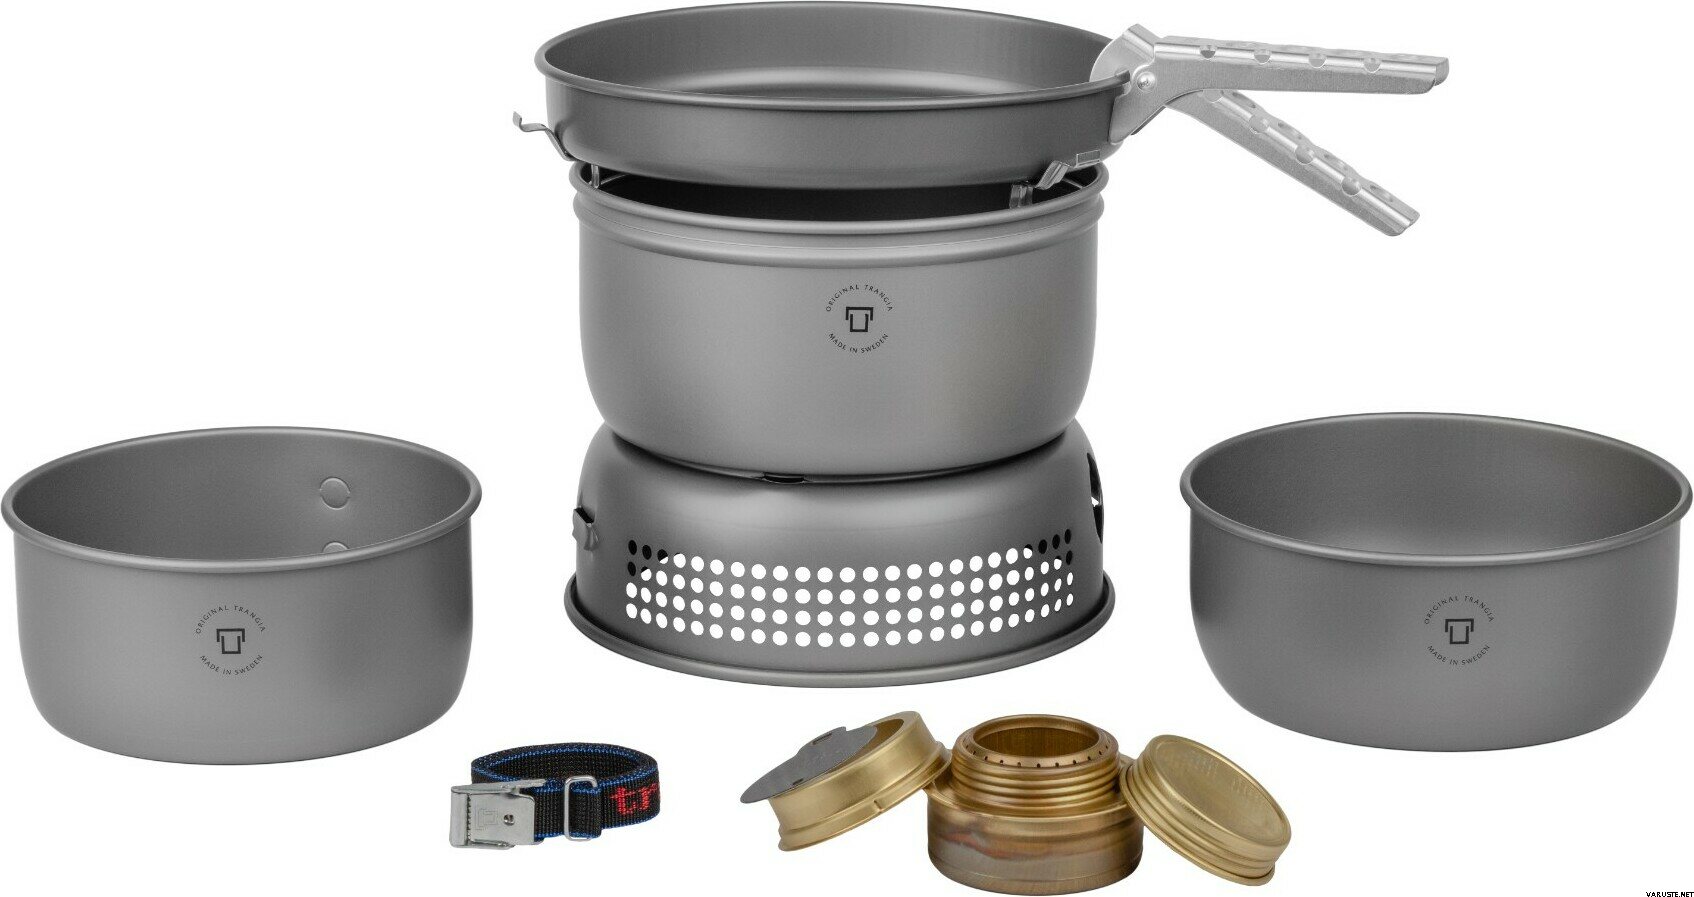 Trangia Stove 25-1 HA, 2 saucepans and frypan (Hard Anodized aluminium), Liquid fuel stoves